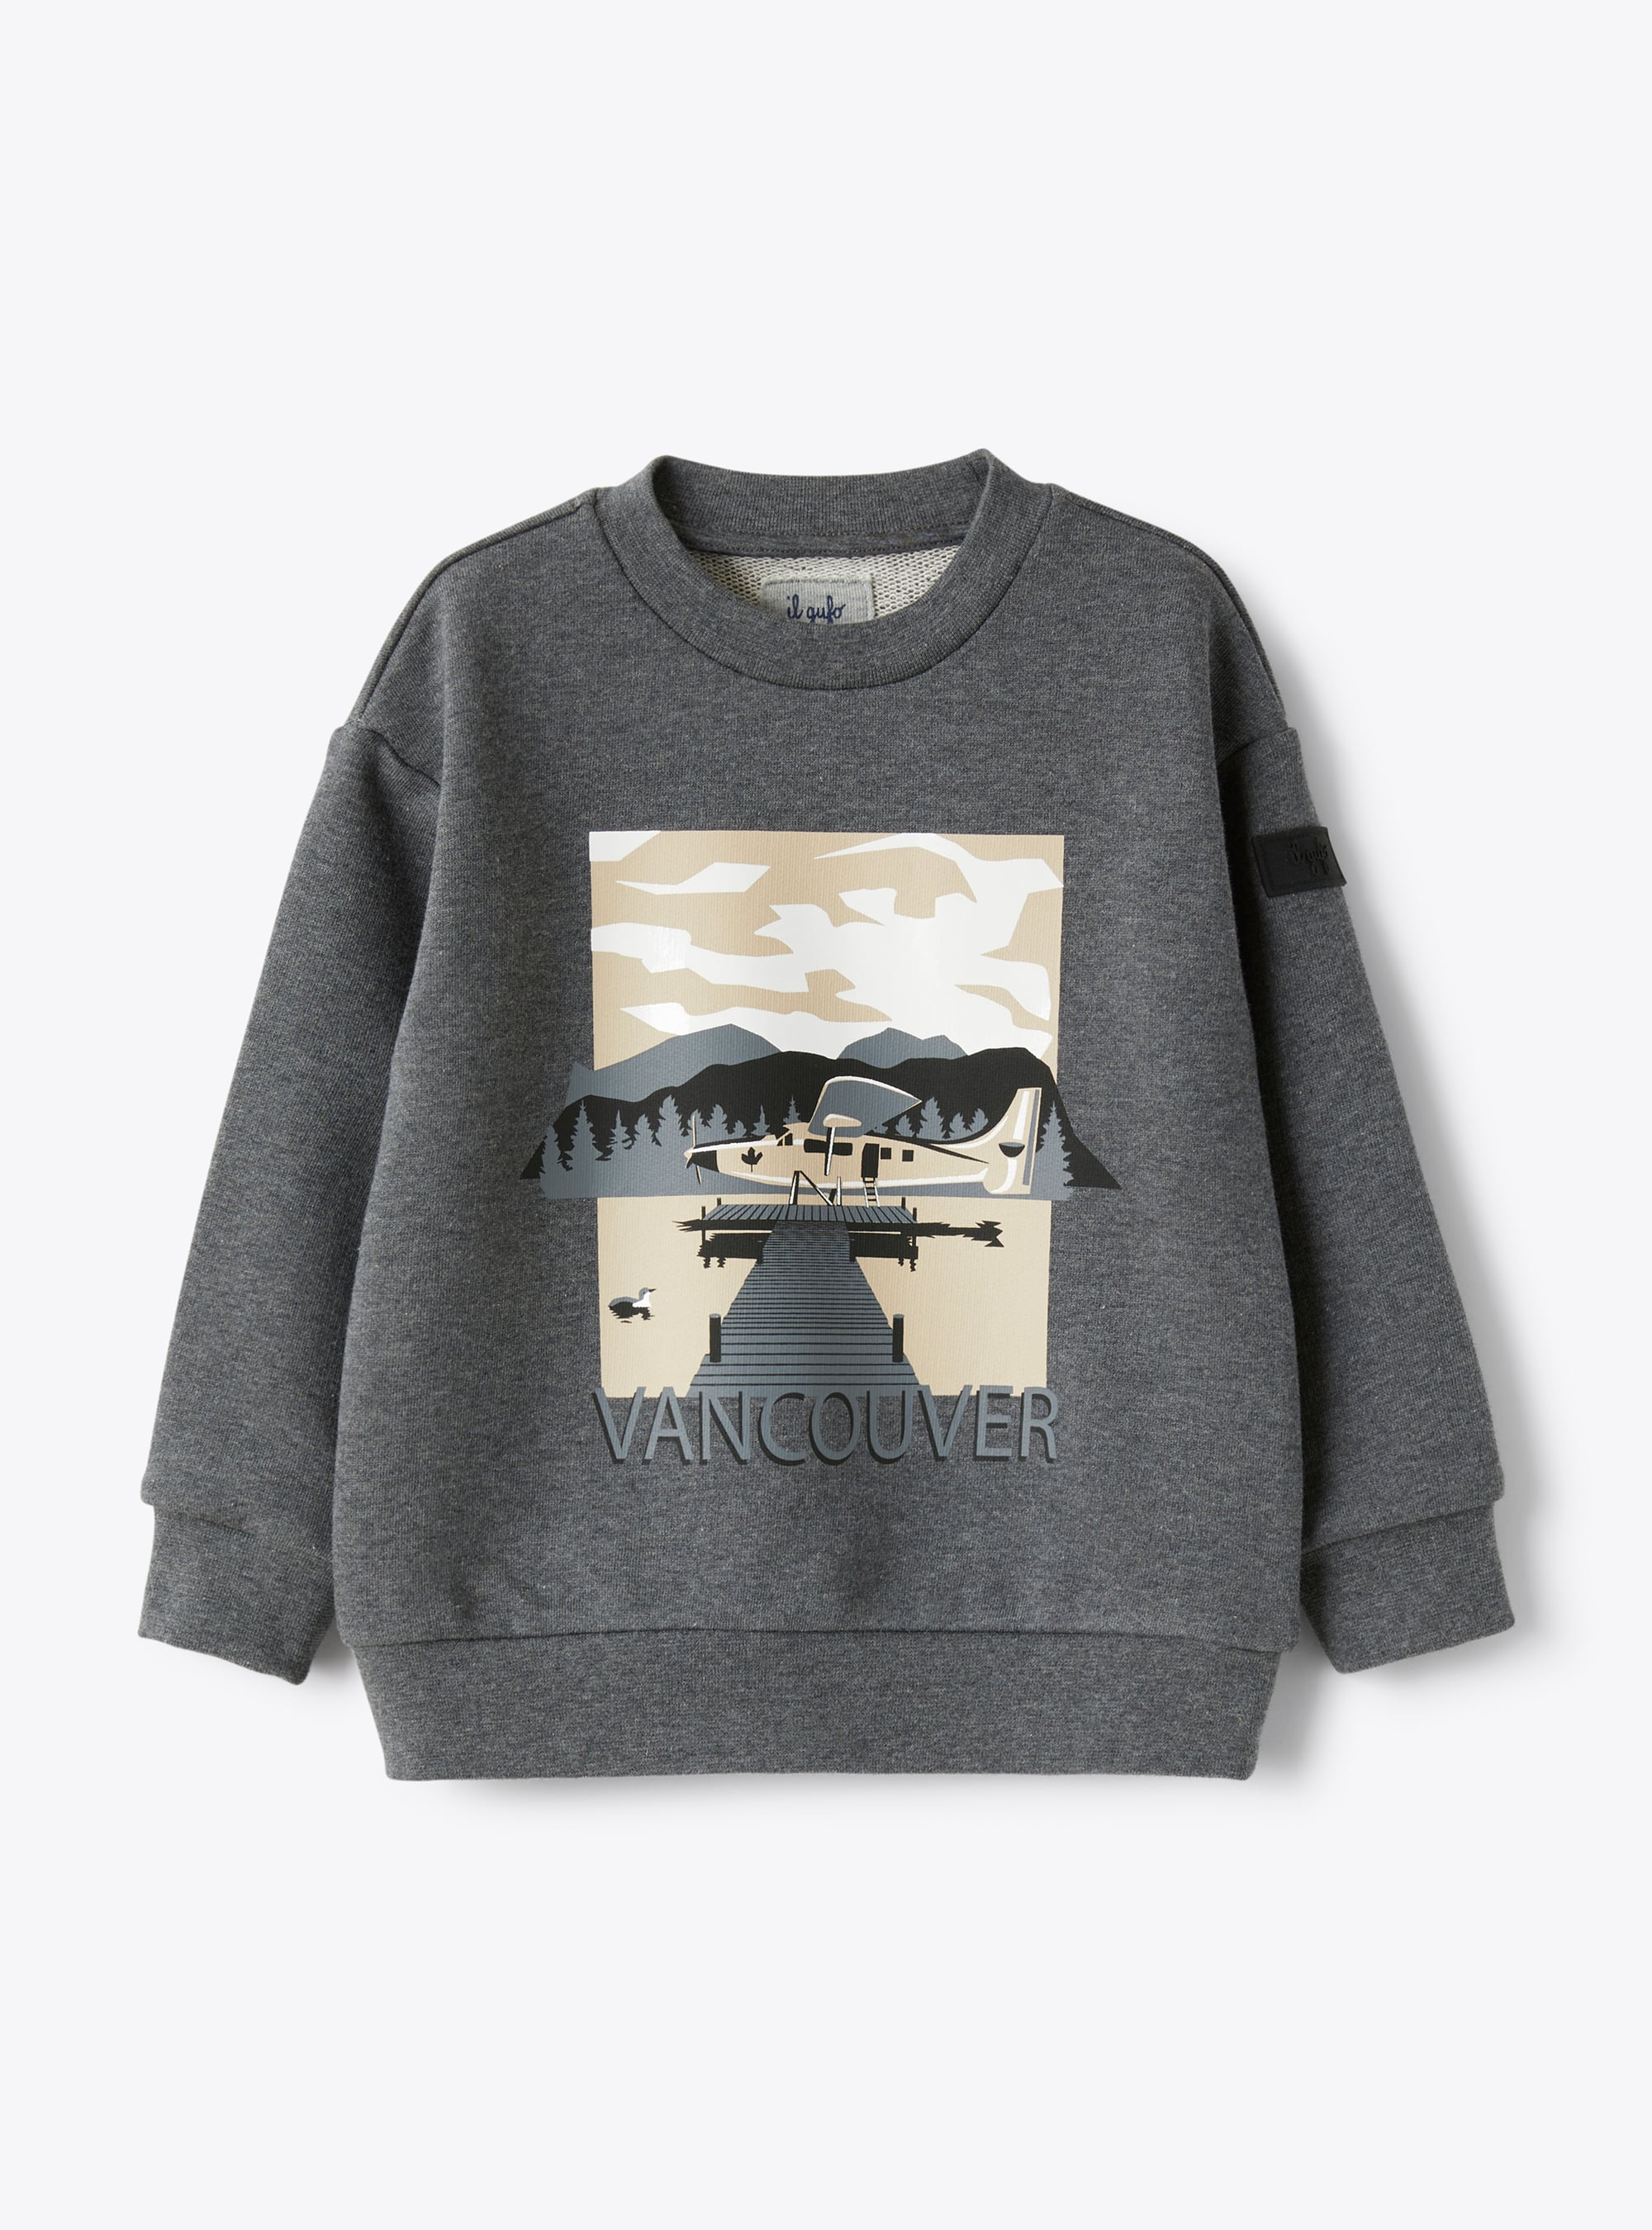 Crew-neck sweatshirt with Vancouver print design - Sweatshirts - Il Gufo